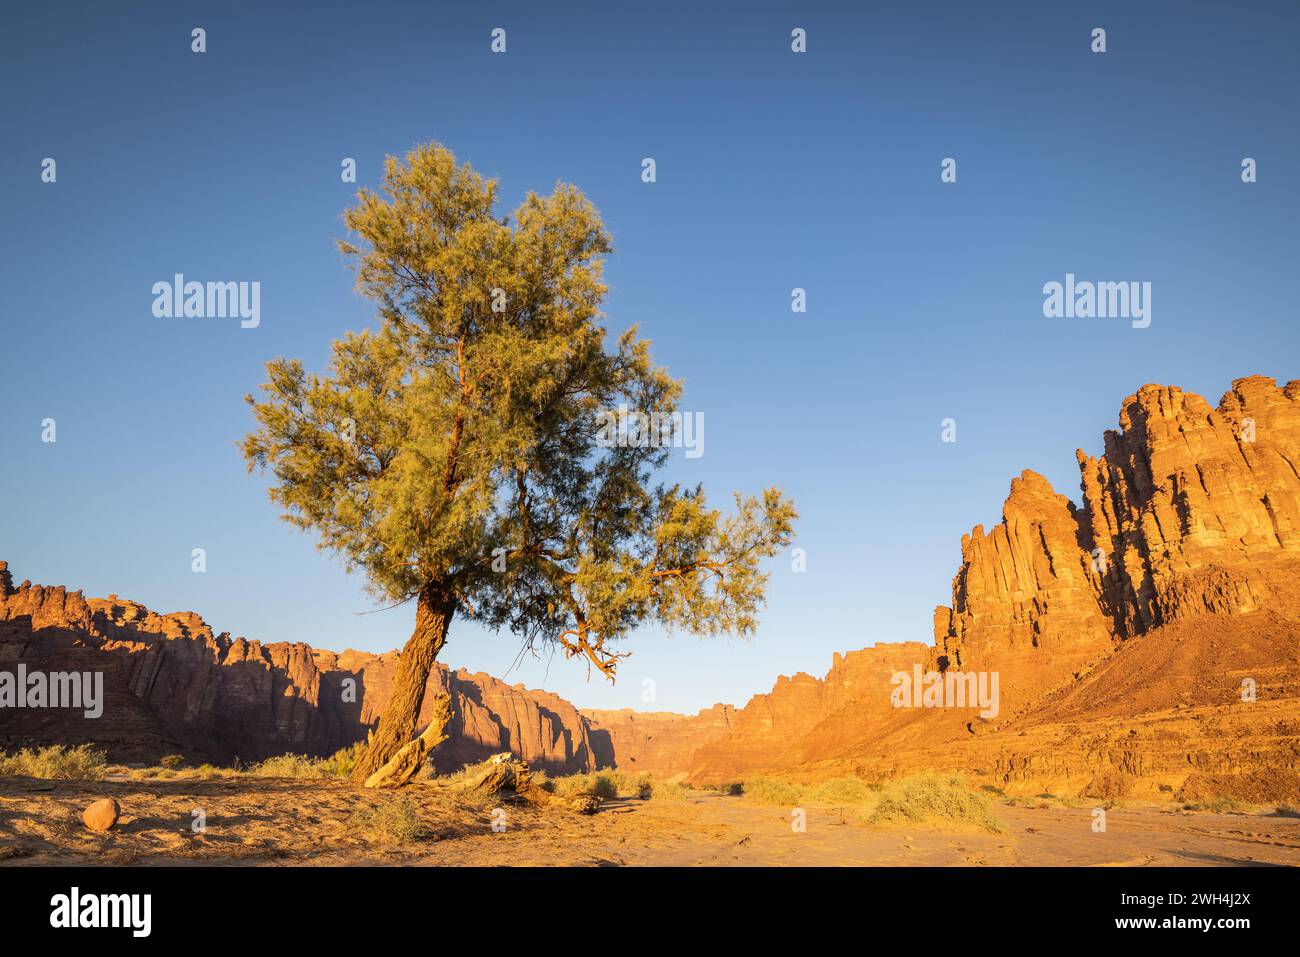 Middle East, Saudi Arabia, Tabuk, Al-Disah. Desert landscape in the Prince Mohammed bin Salman Natural Reserve. Stock Photo